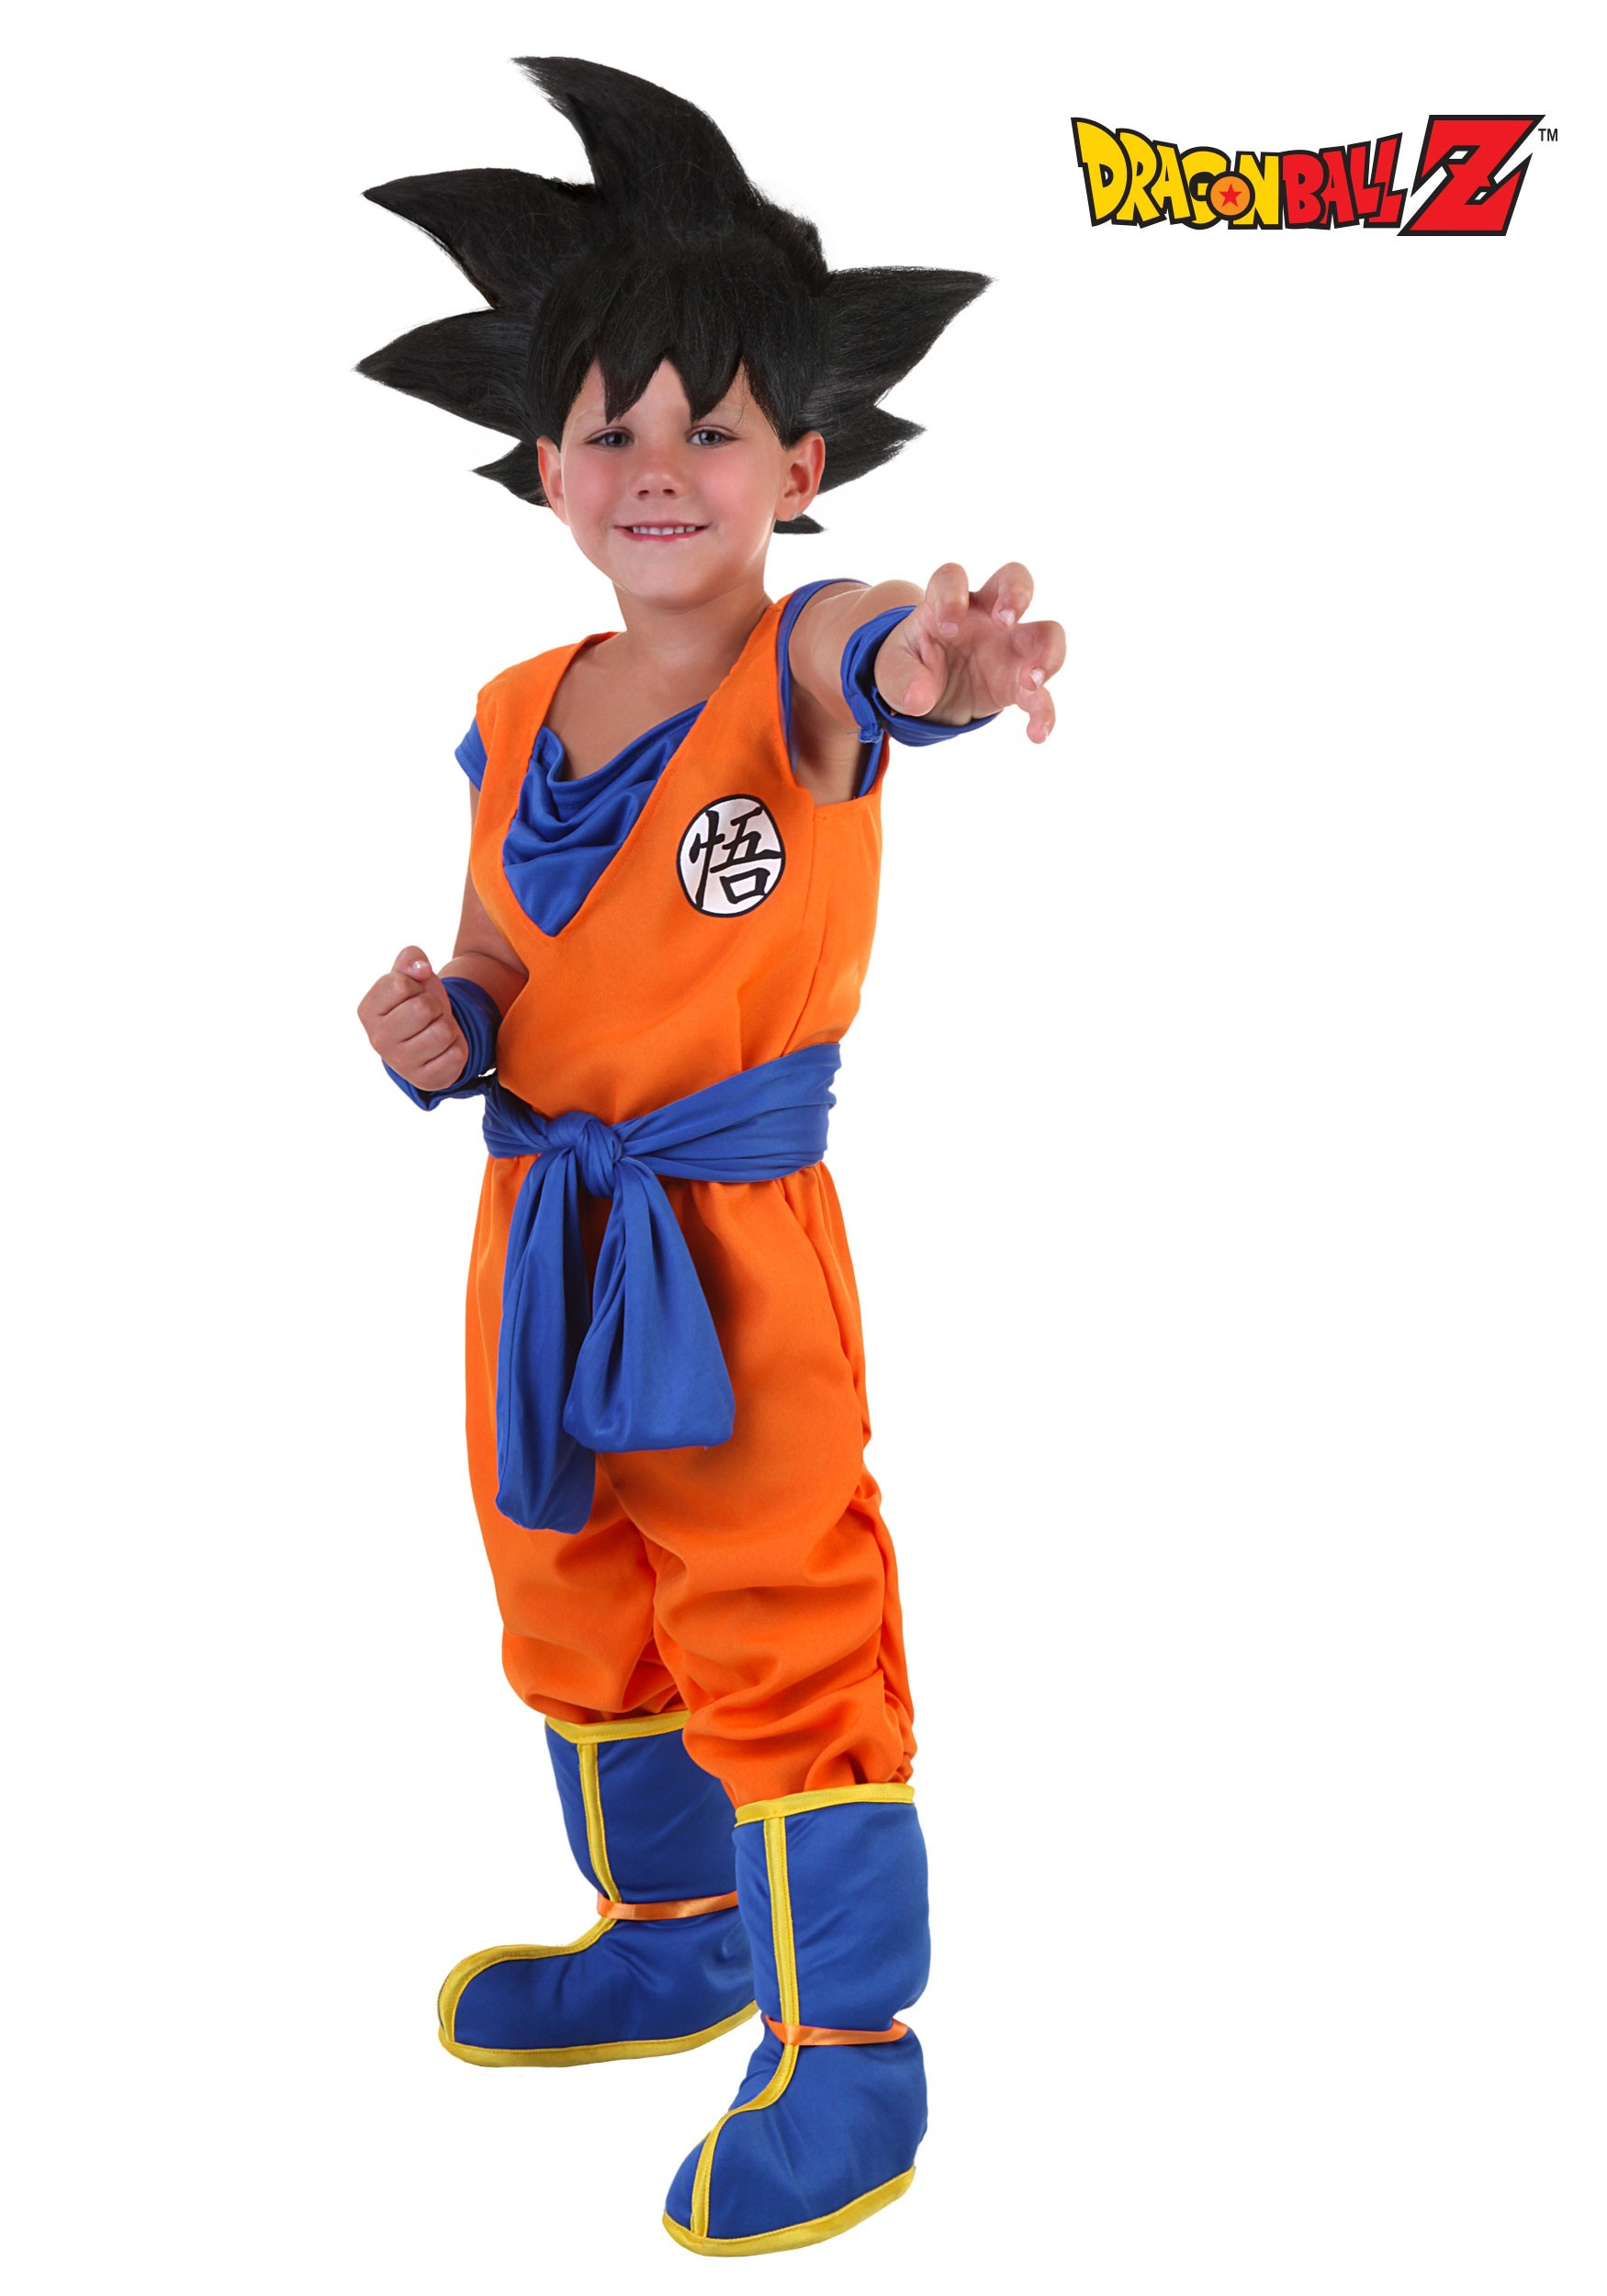 Best ideas about Goku Costume DIY
. Save or Pin Toddler Goku Costume Now.